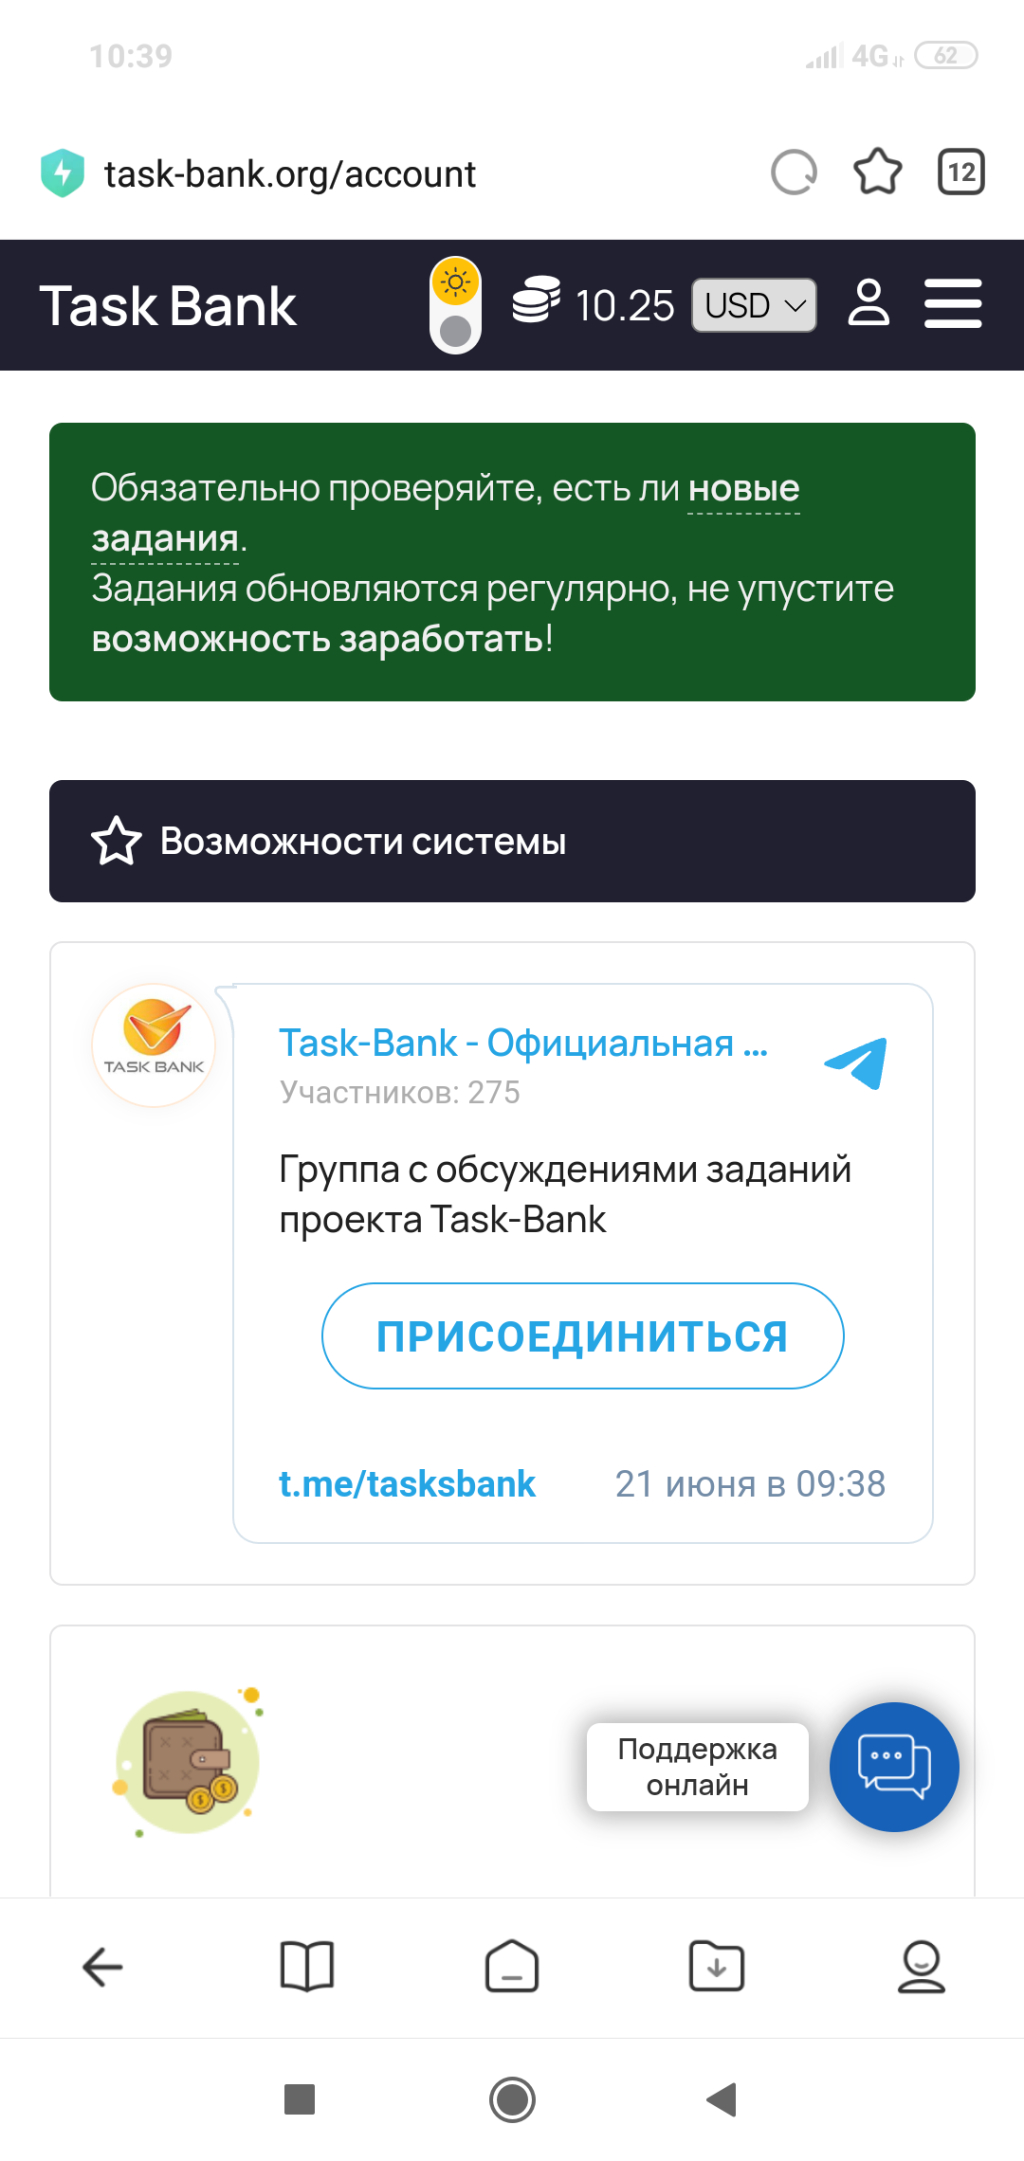 Task-Bank - Работа на сайте Task -Bank